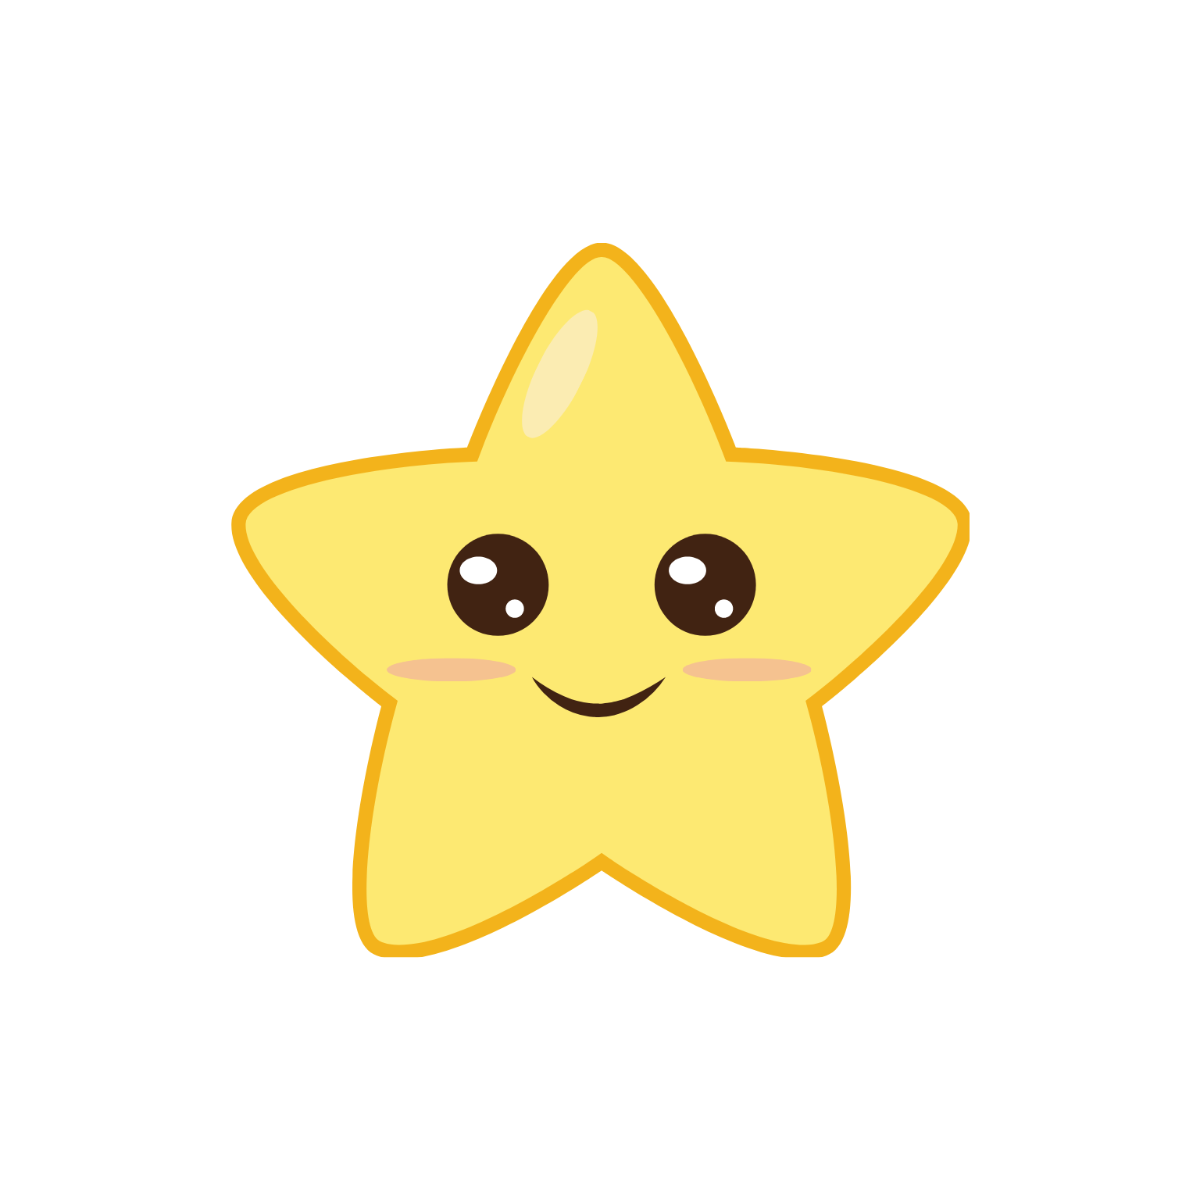 Free Star Emoji Vector Template